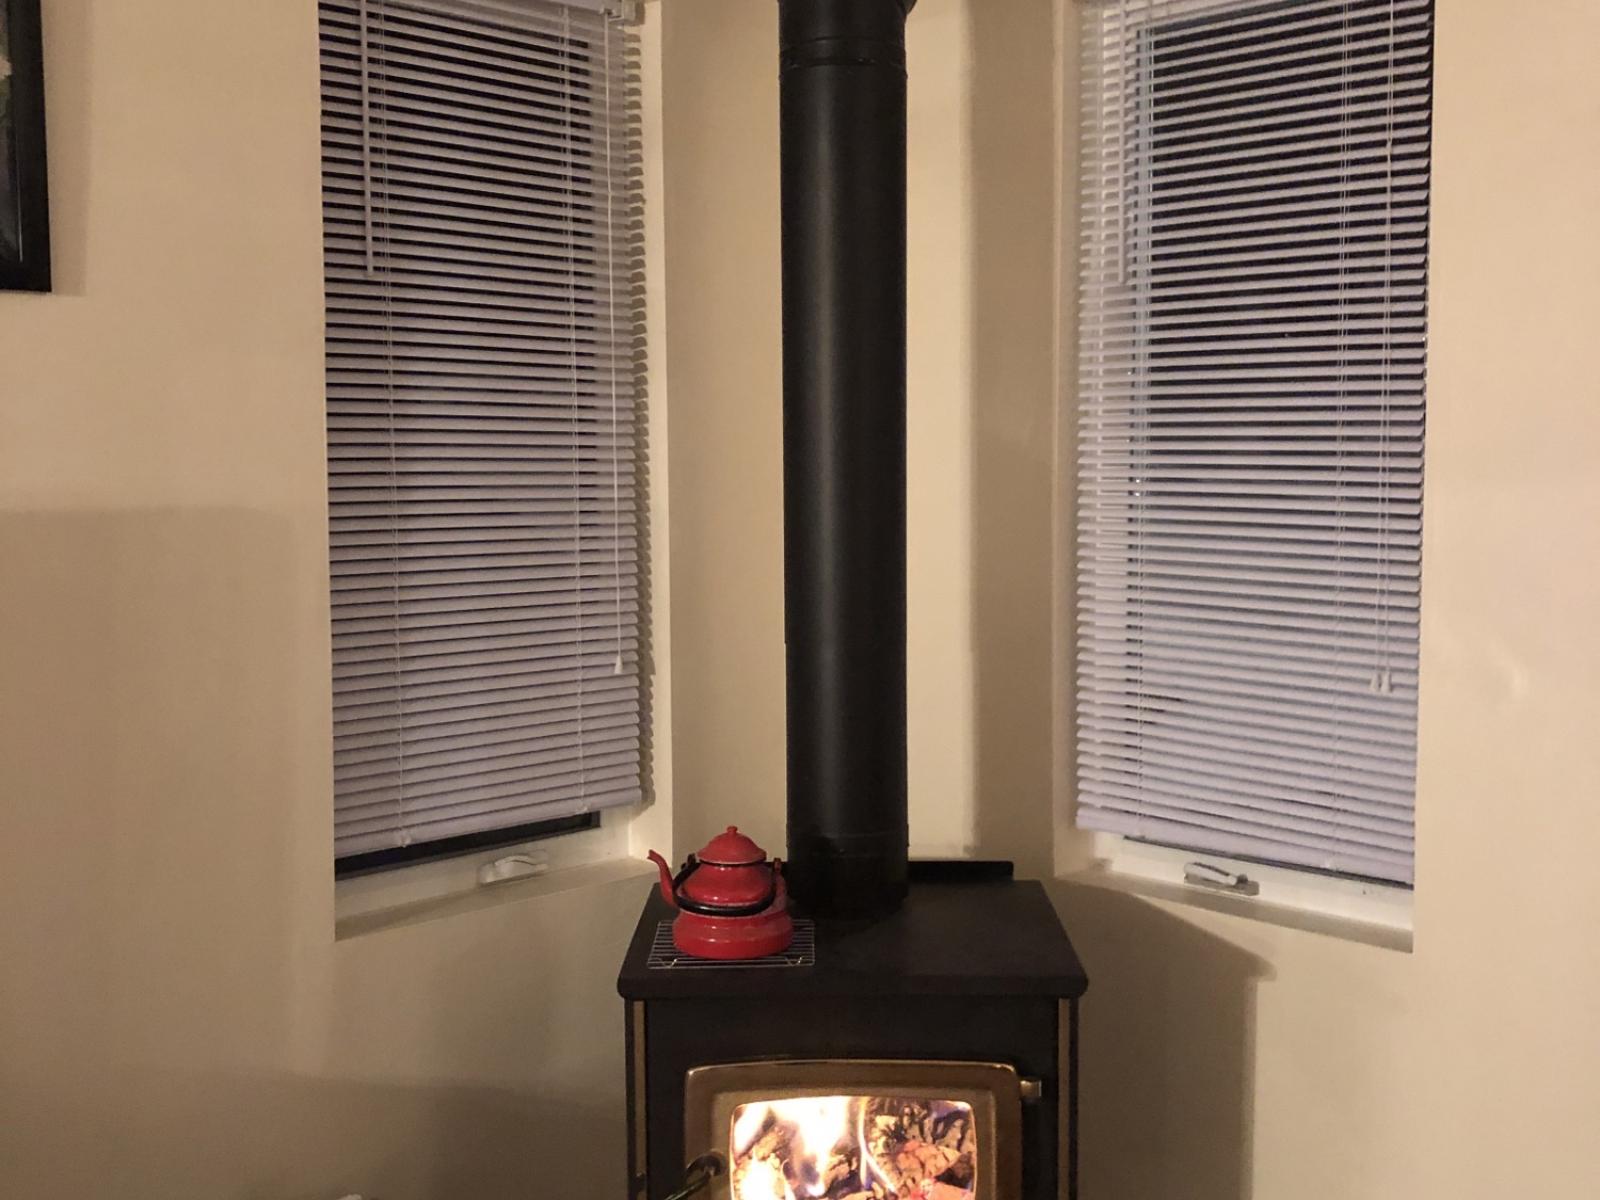 Wood Heater